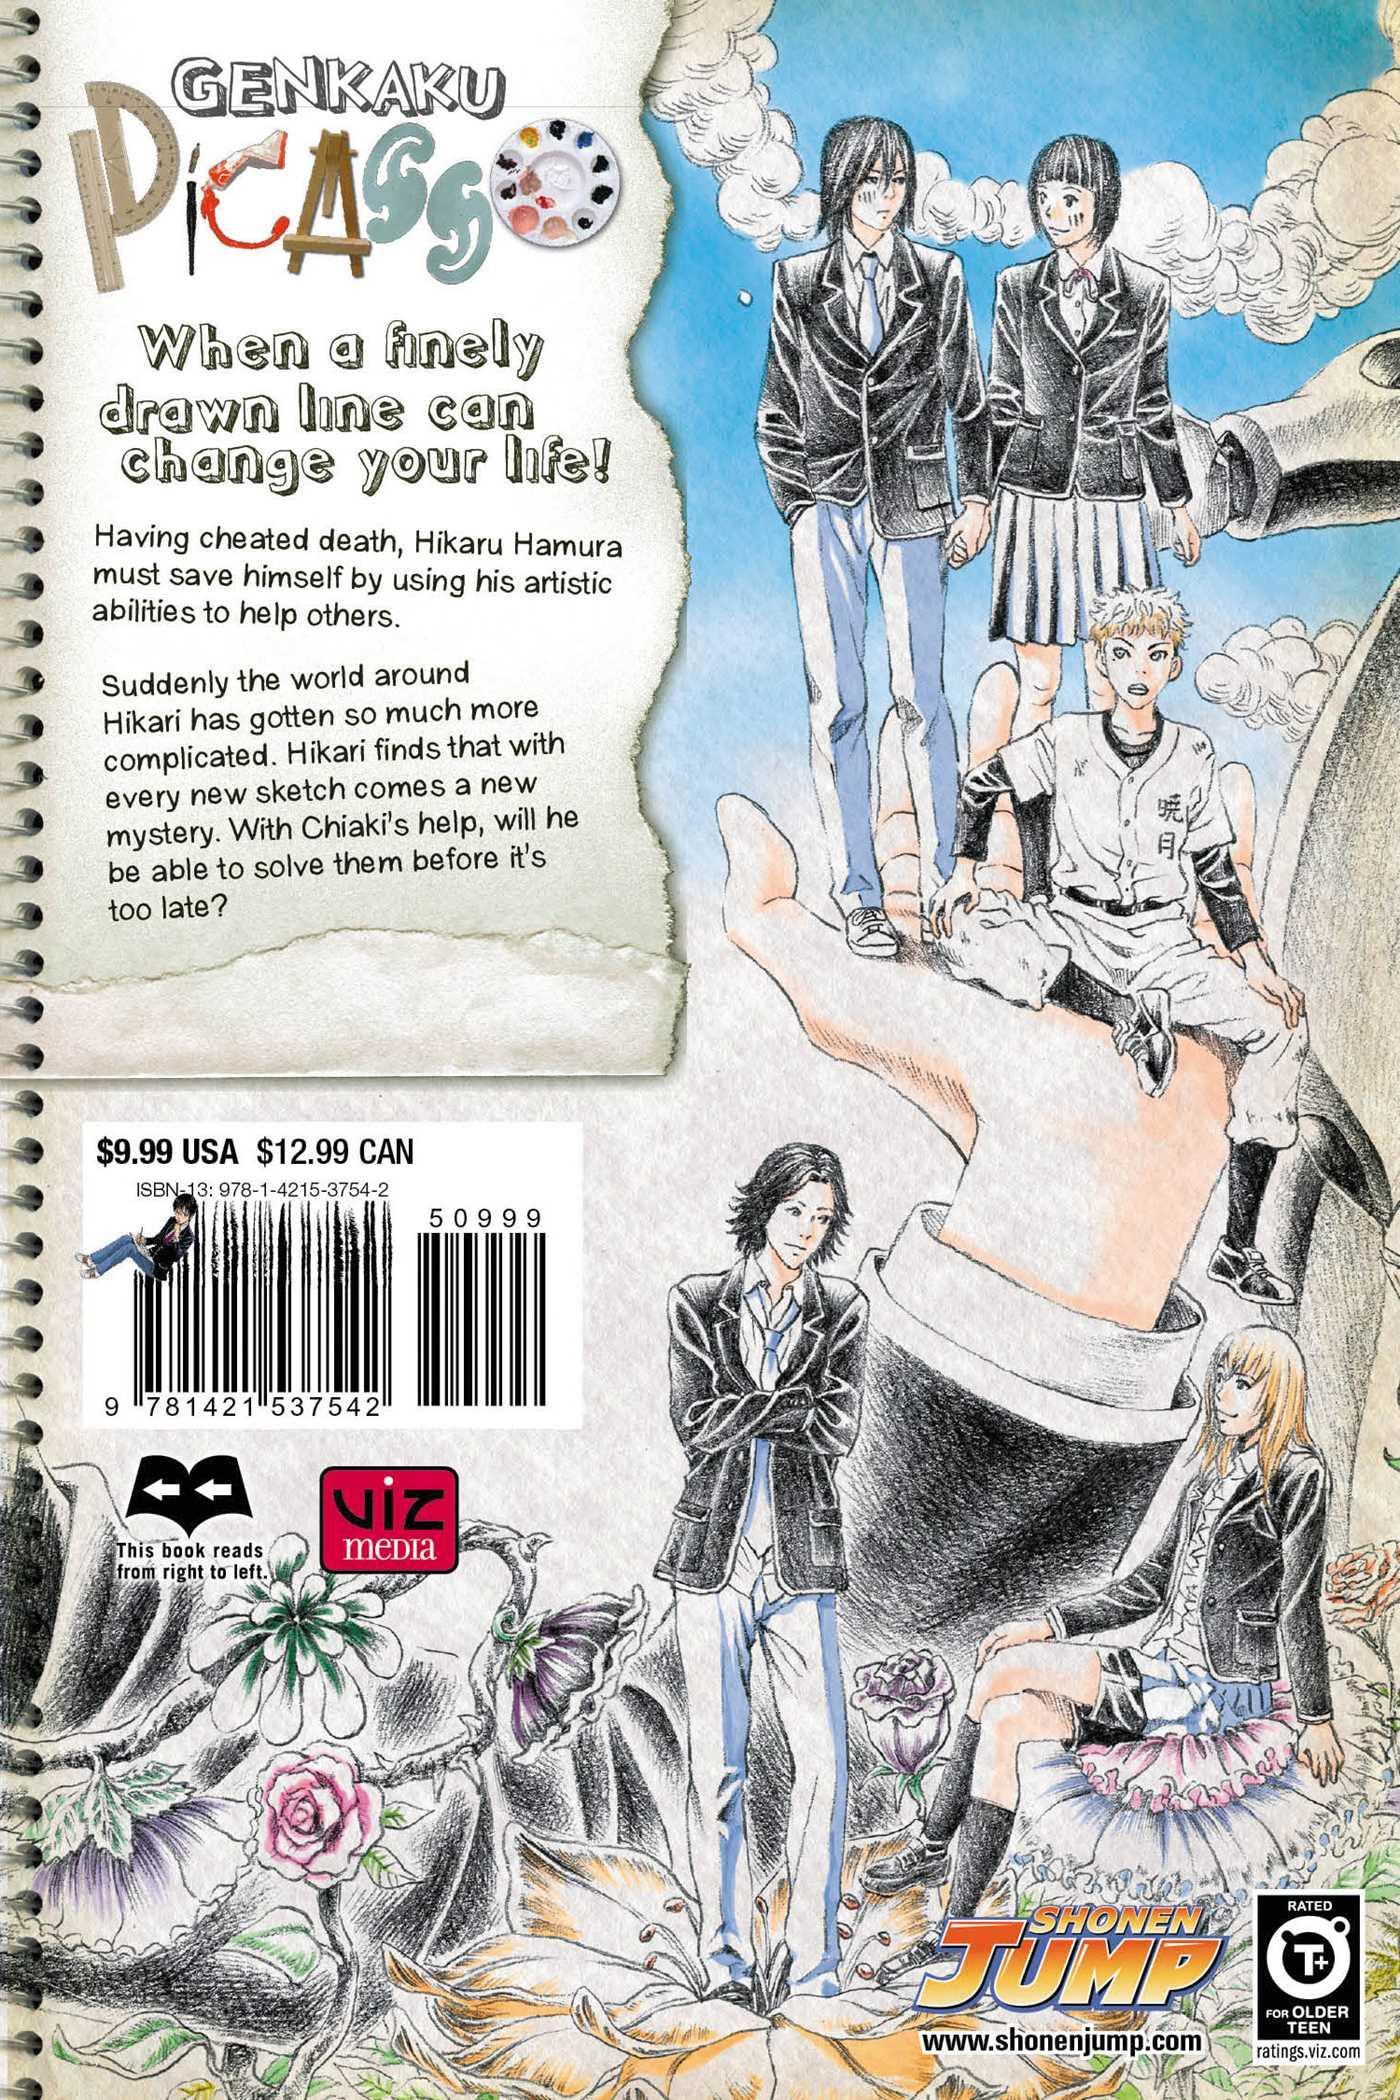 Genkaku Picasso (Manga) Vol. 2 - Tankobonbon